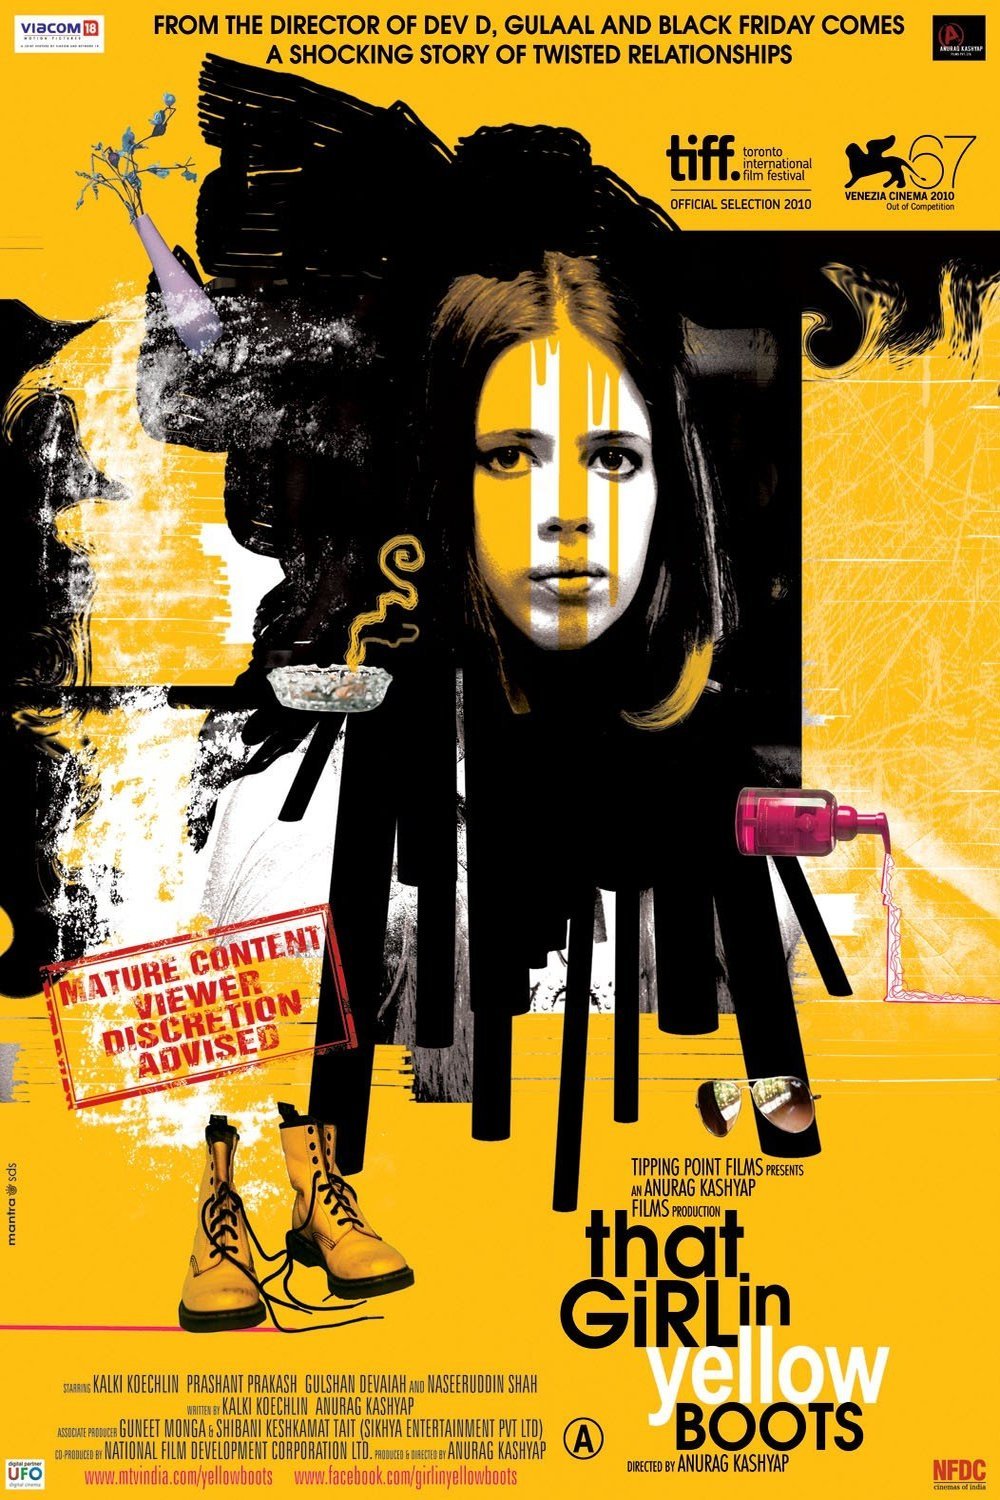 L'affiche originale du film That Girl in Yellow Boots en Hindi